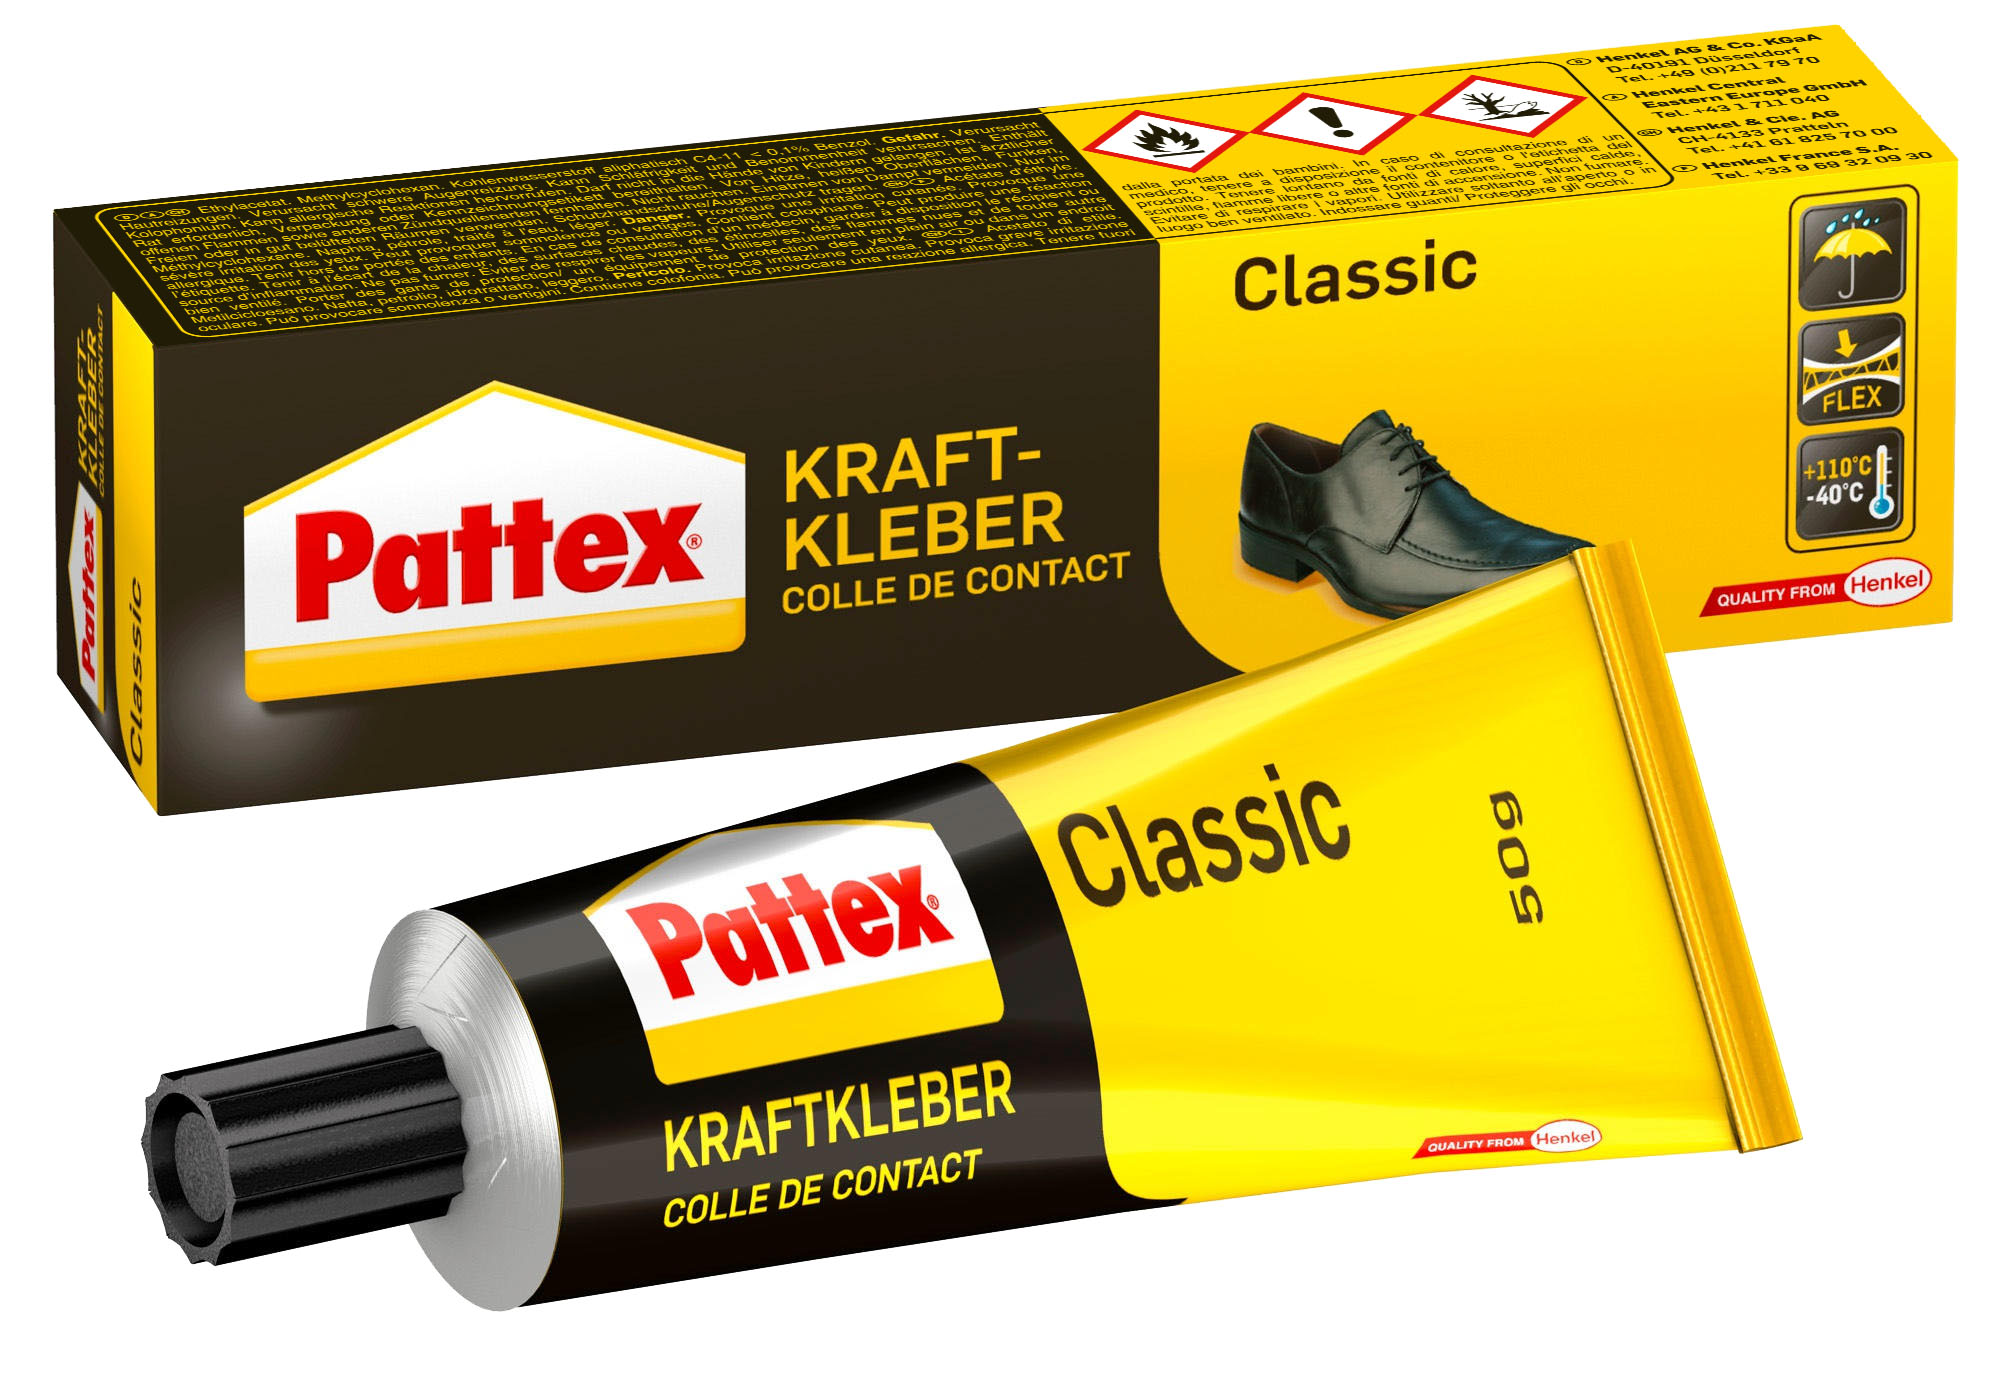 Pattex Kraftkleber Classic hochwärmefest, 50 g